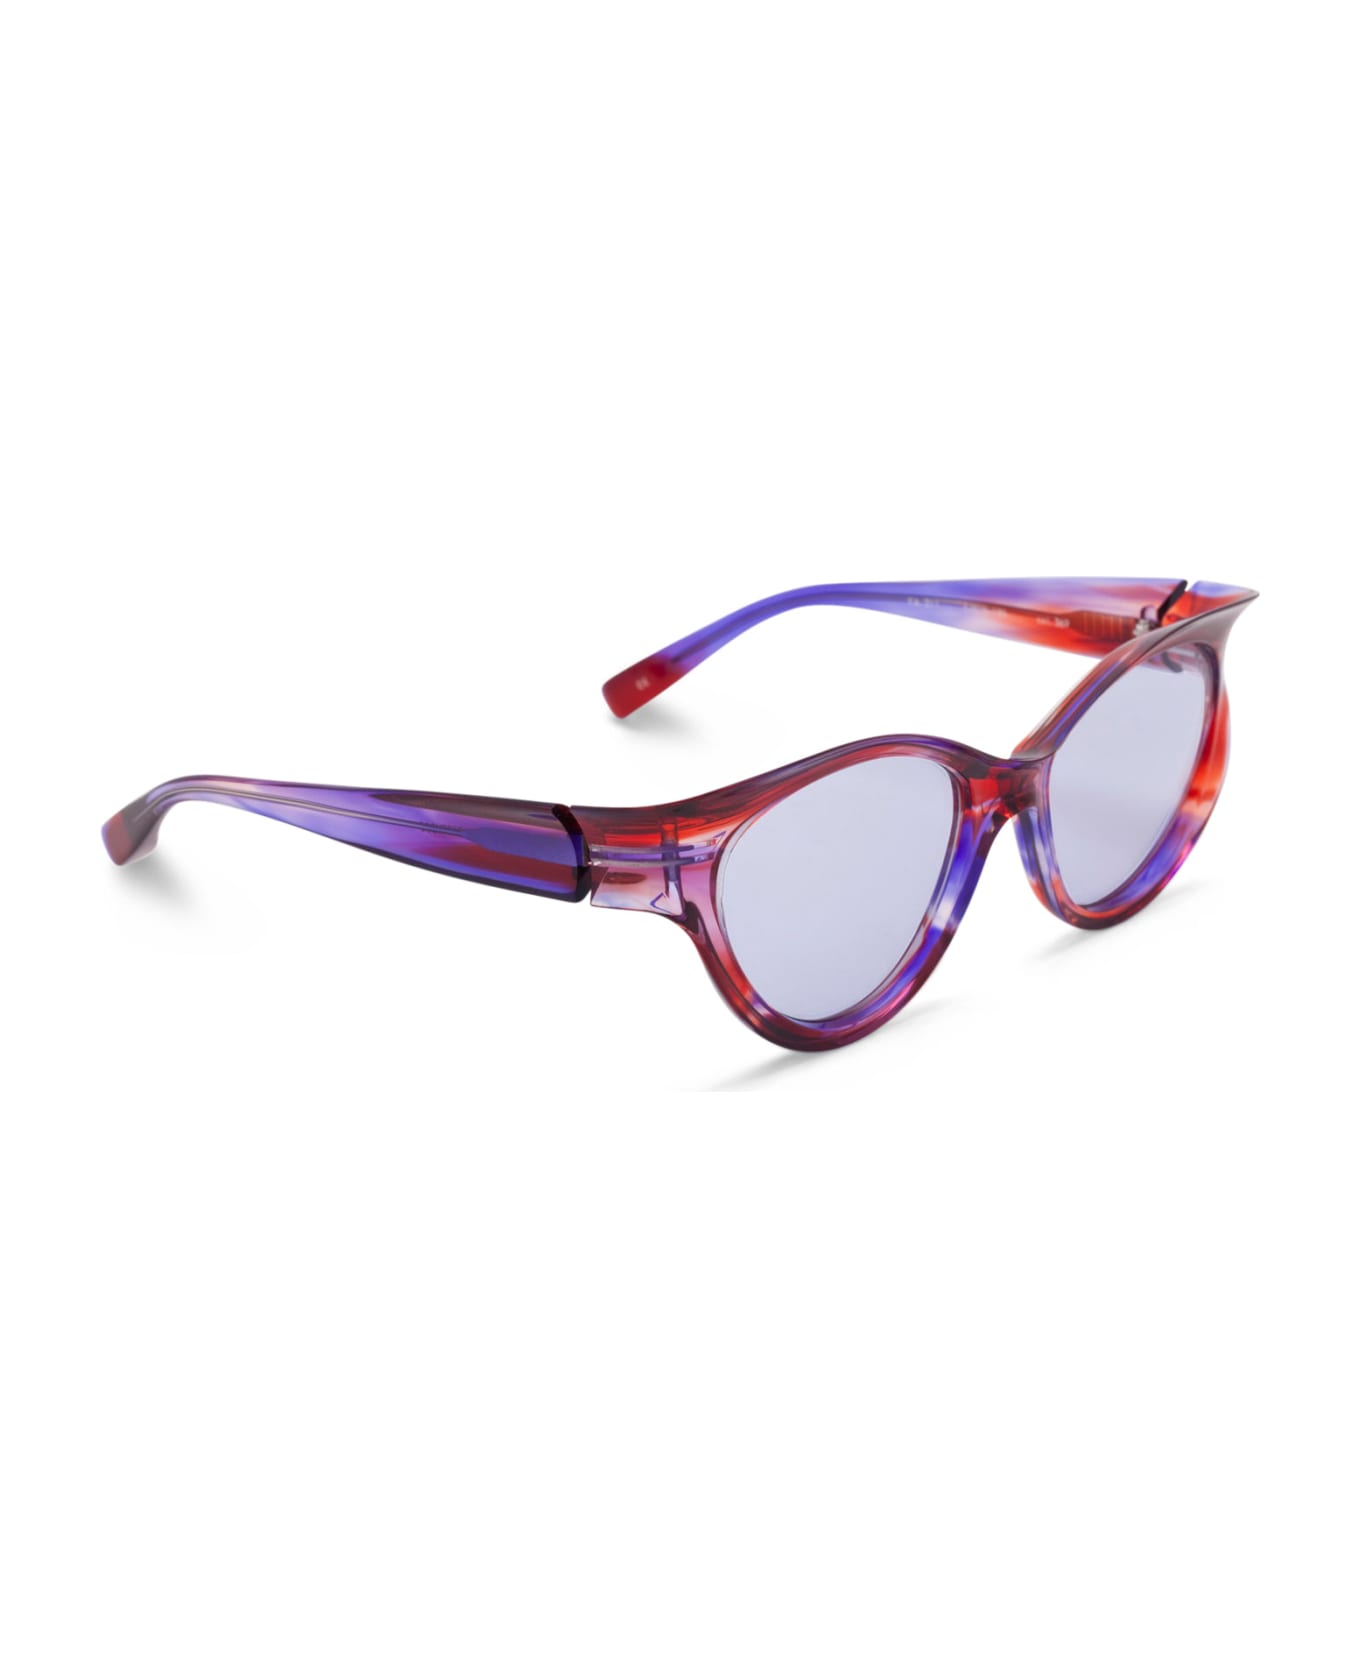 FACTORY900 Fa 311-369 Sunglasses - mottled red/purple サングラス